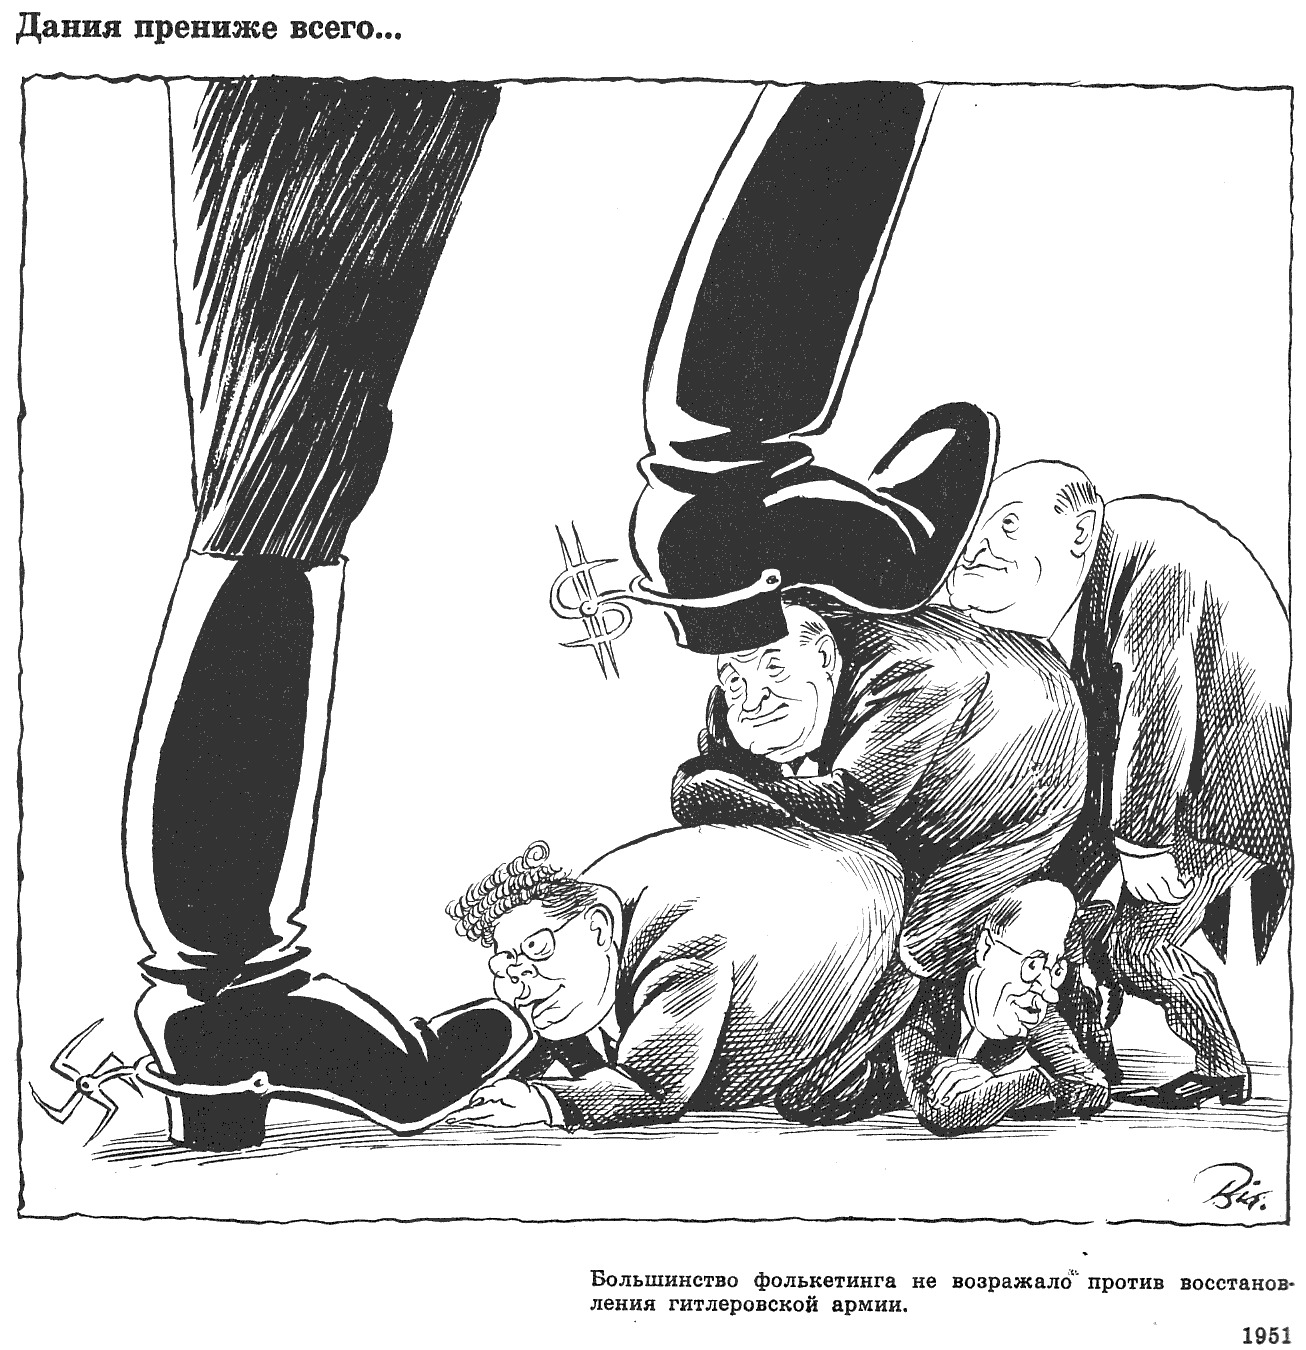 Херлуф Бидструп - датский карикатурист середины прошлого века